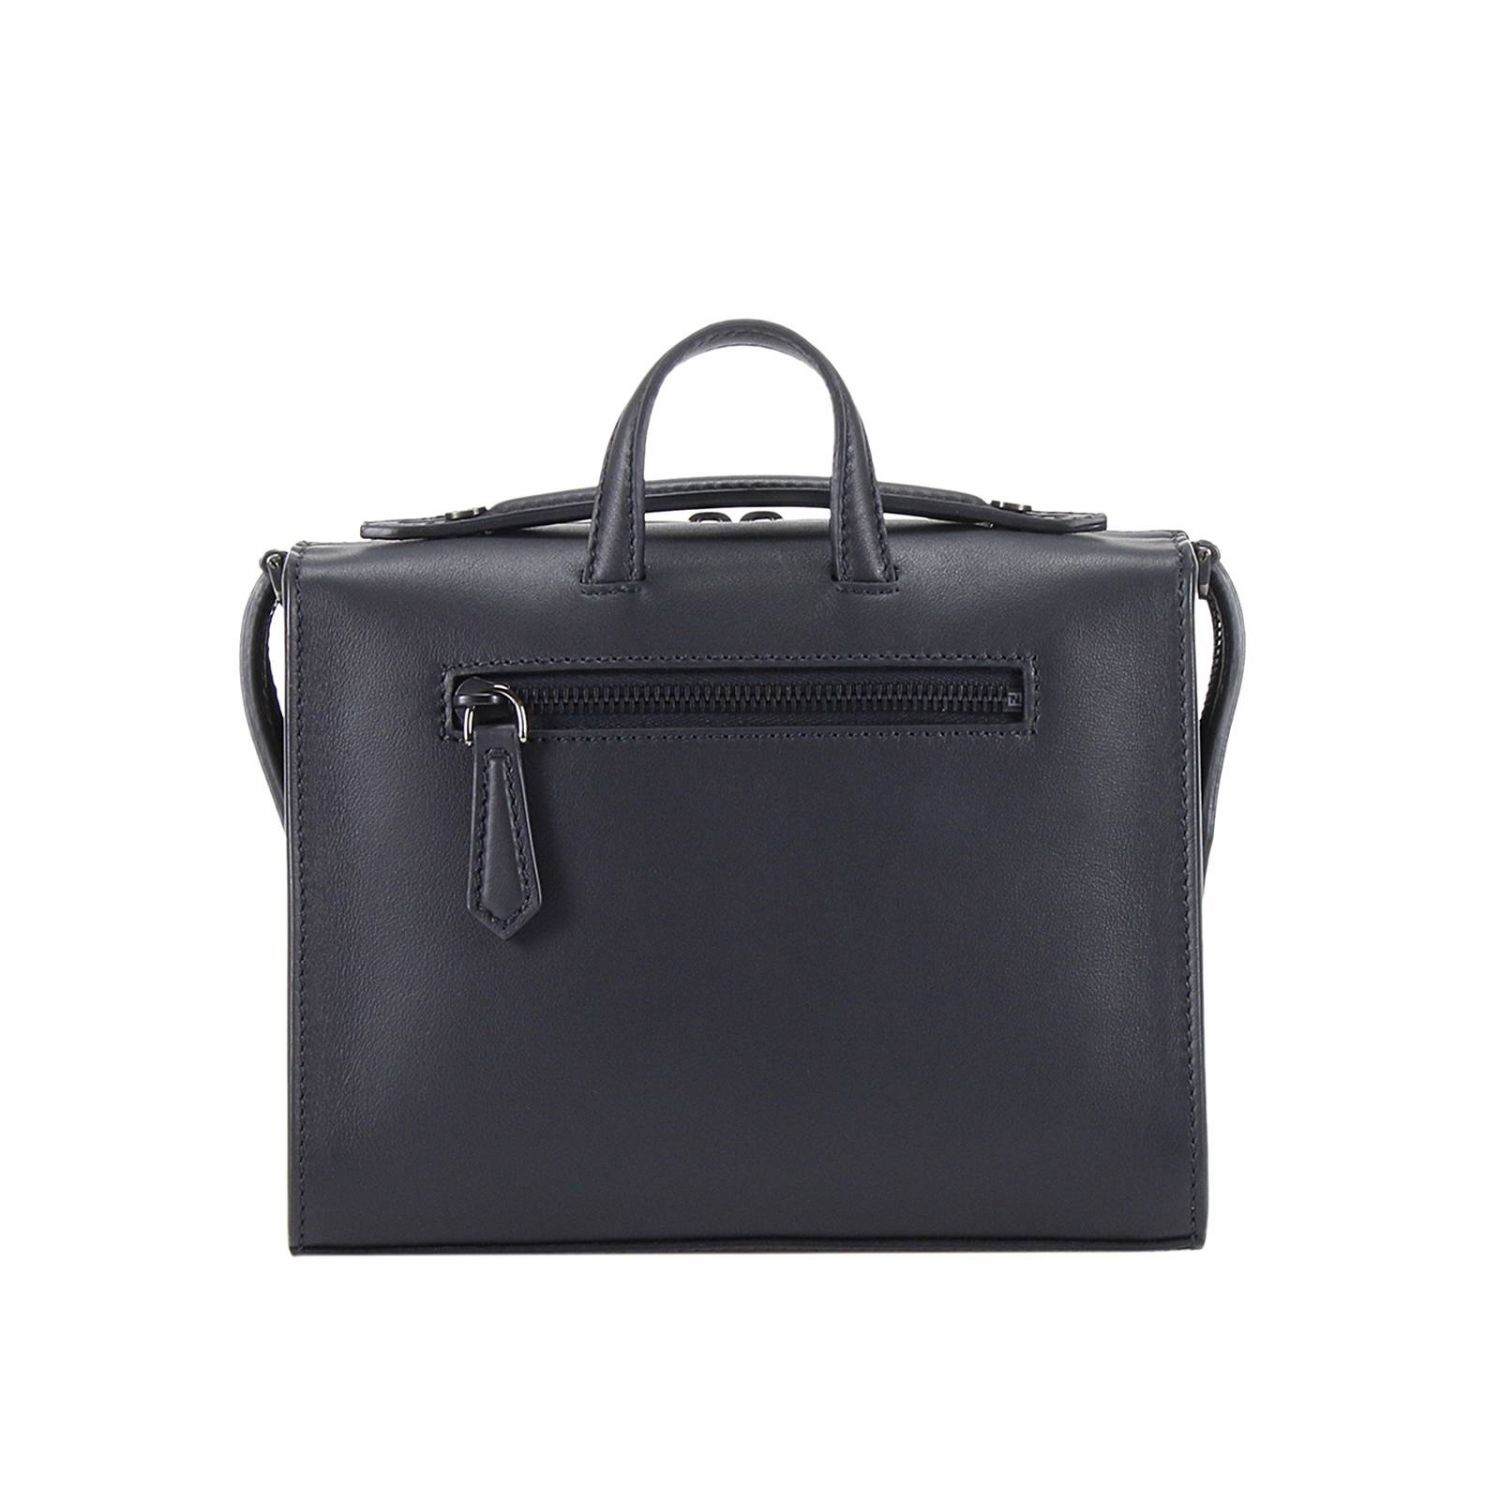 FENDI: Bags men | Briefcase Fendi Men Black | Briefcase Fendi 7M0238 ...